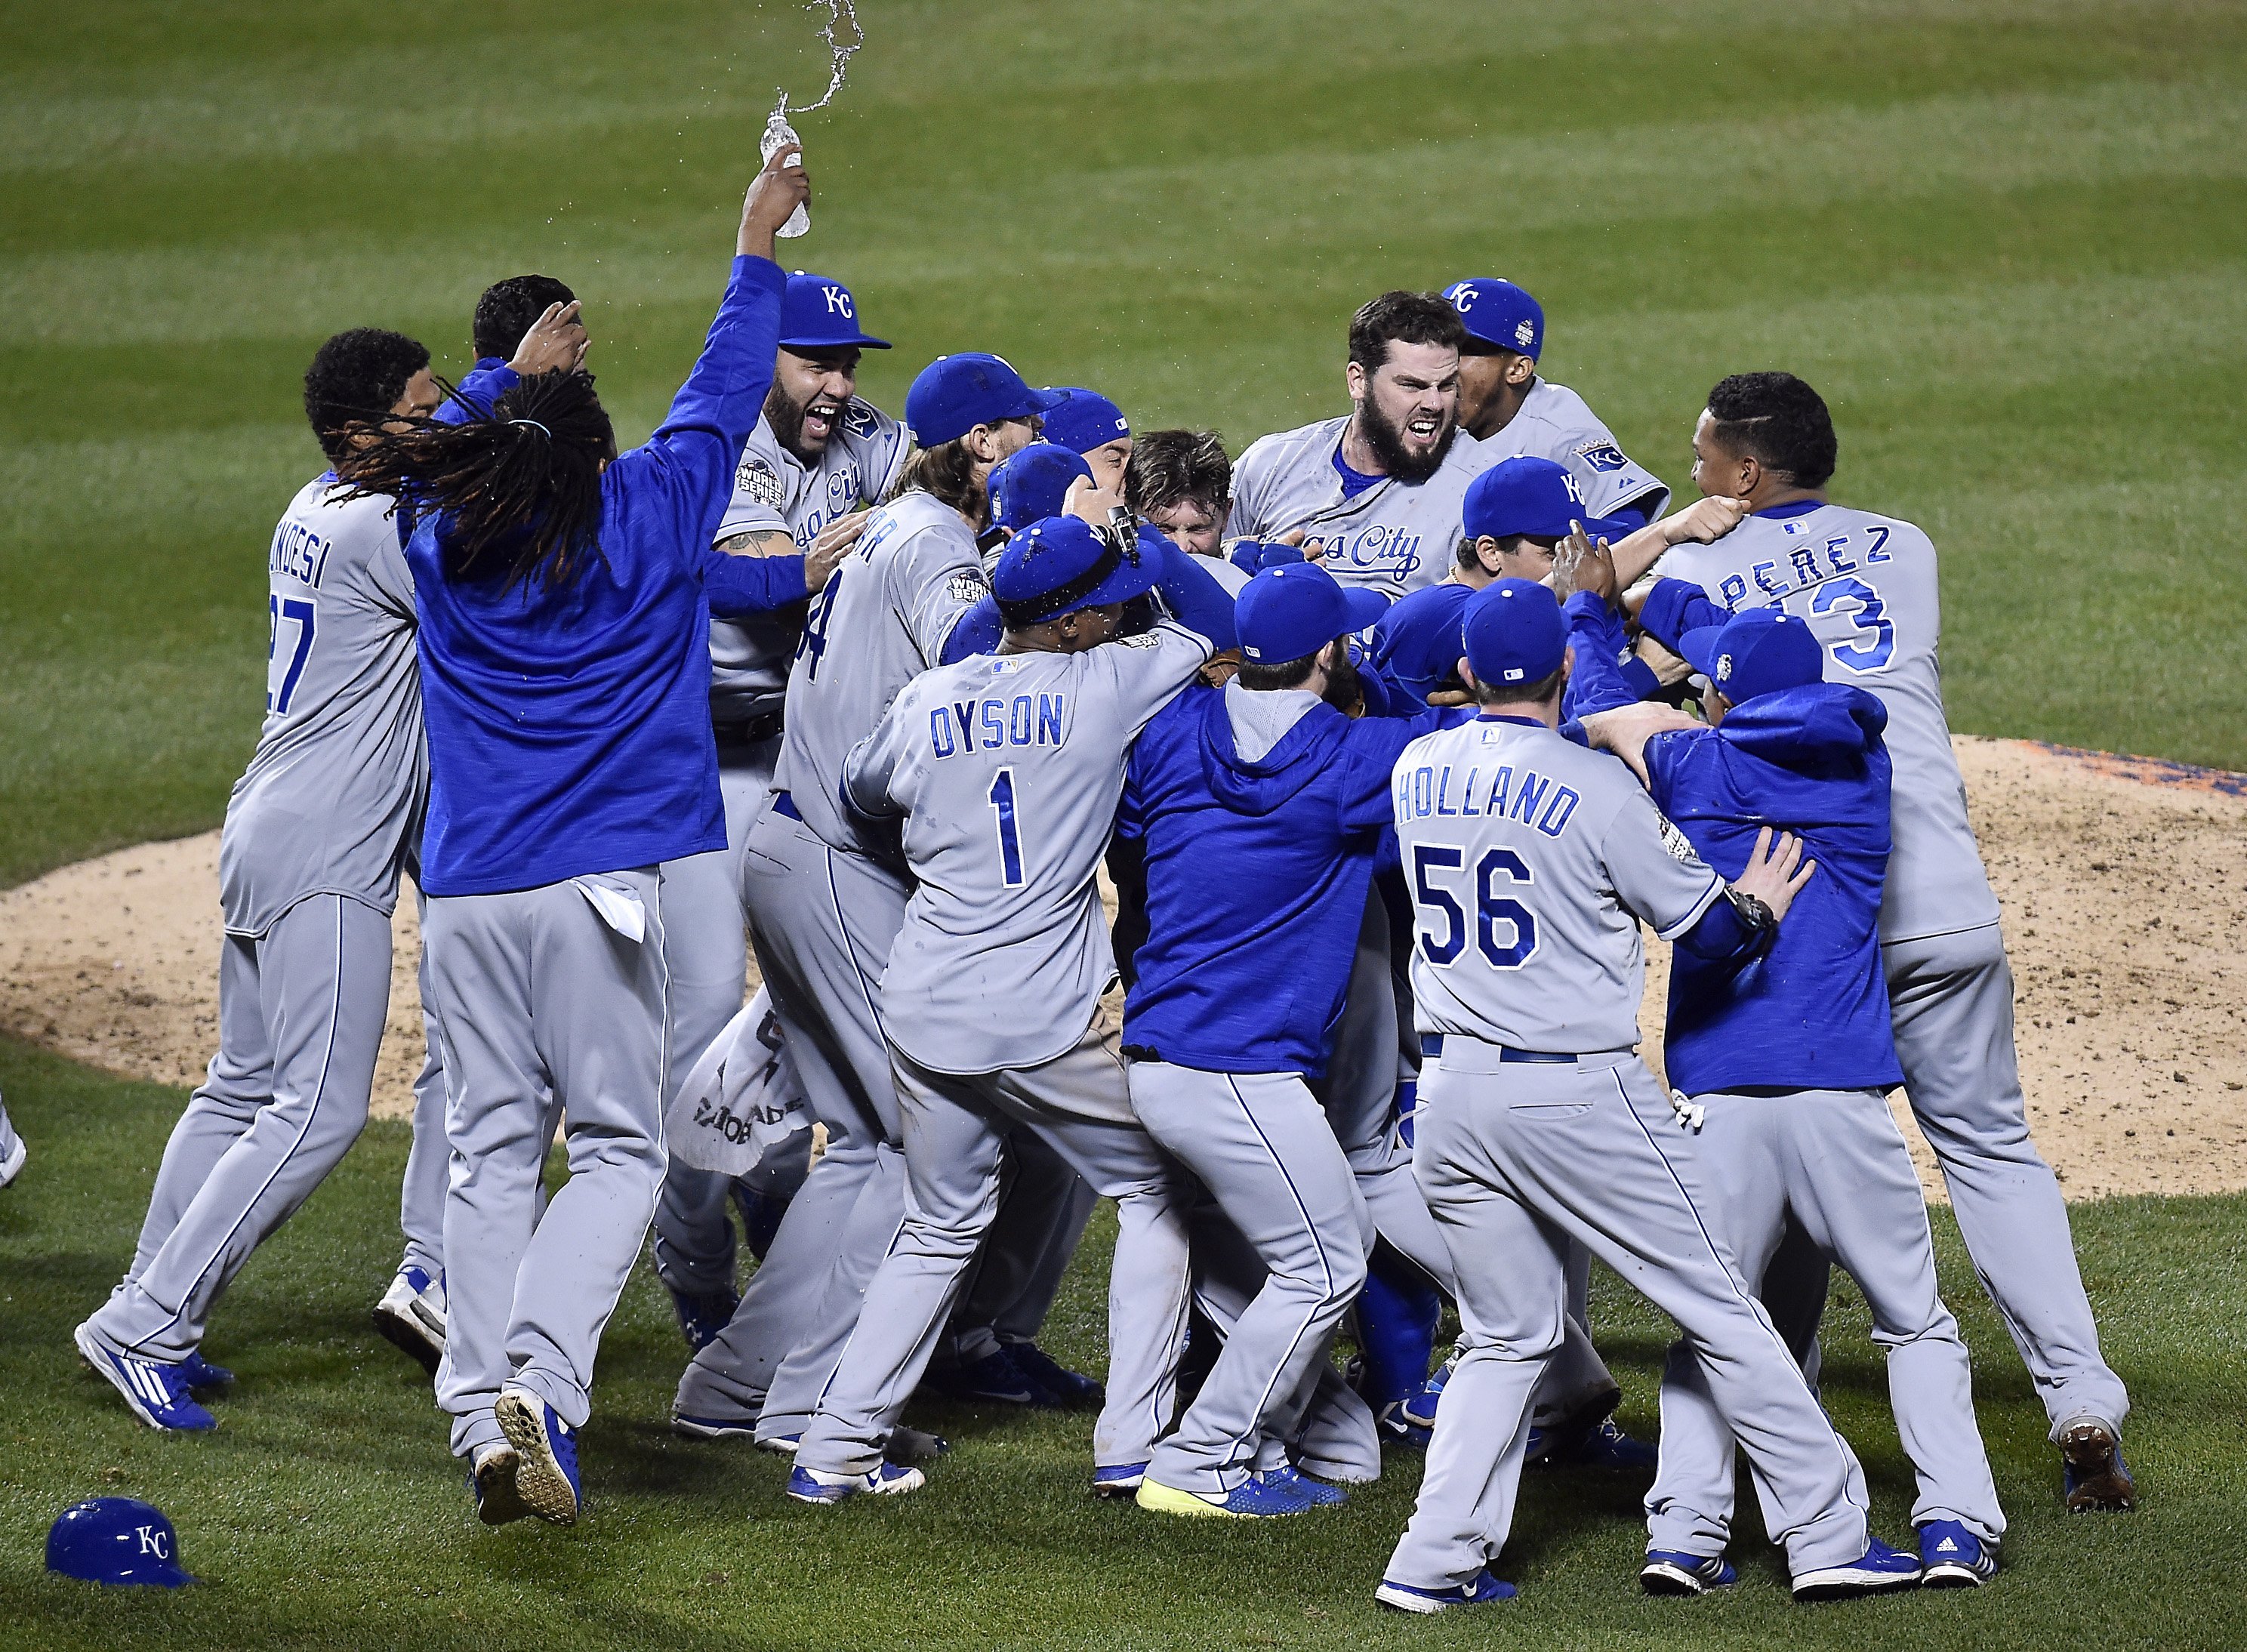 2015 World Series Champions: Kansas City Royals by League Baseball